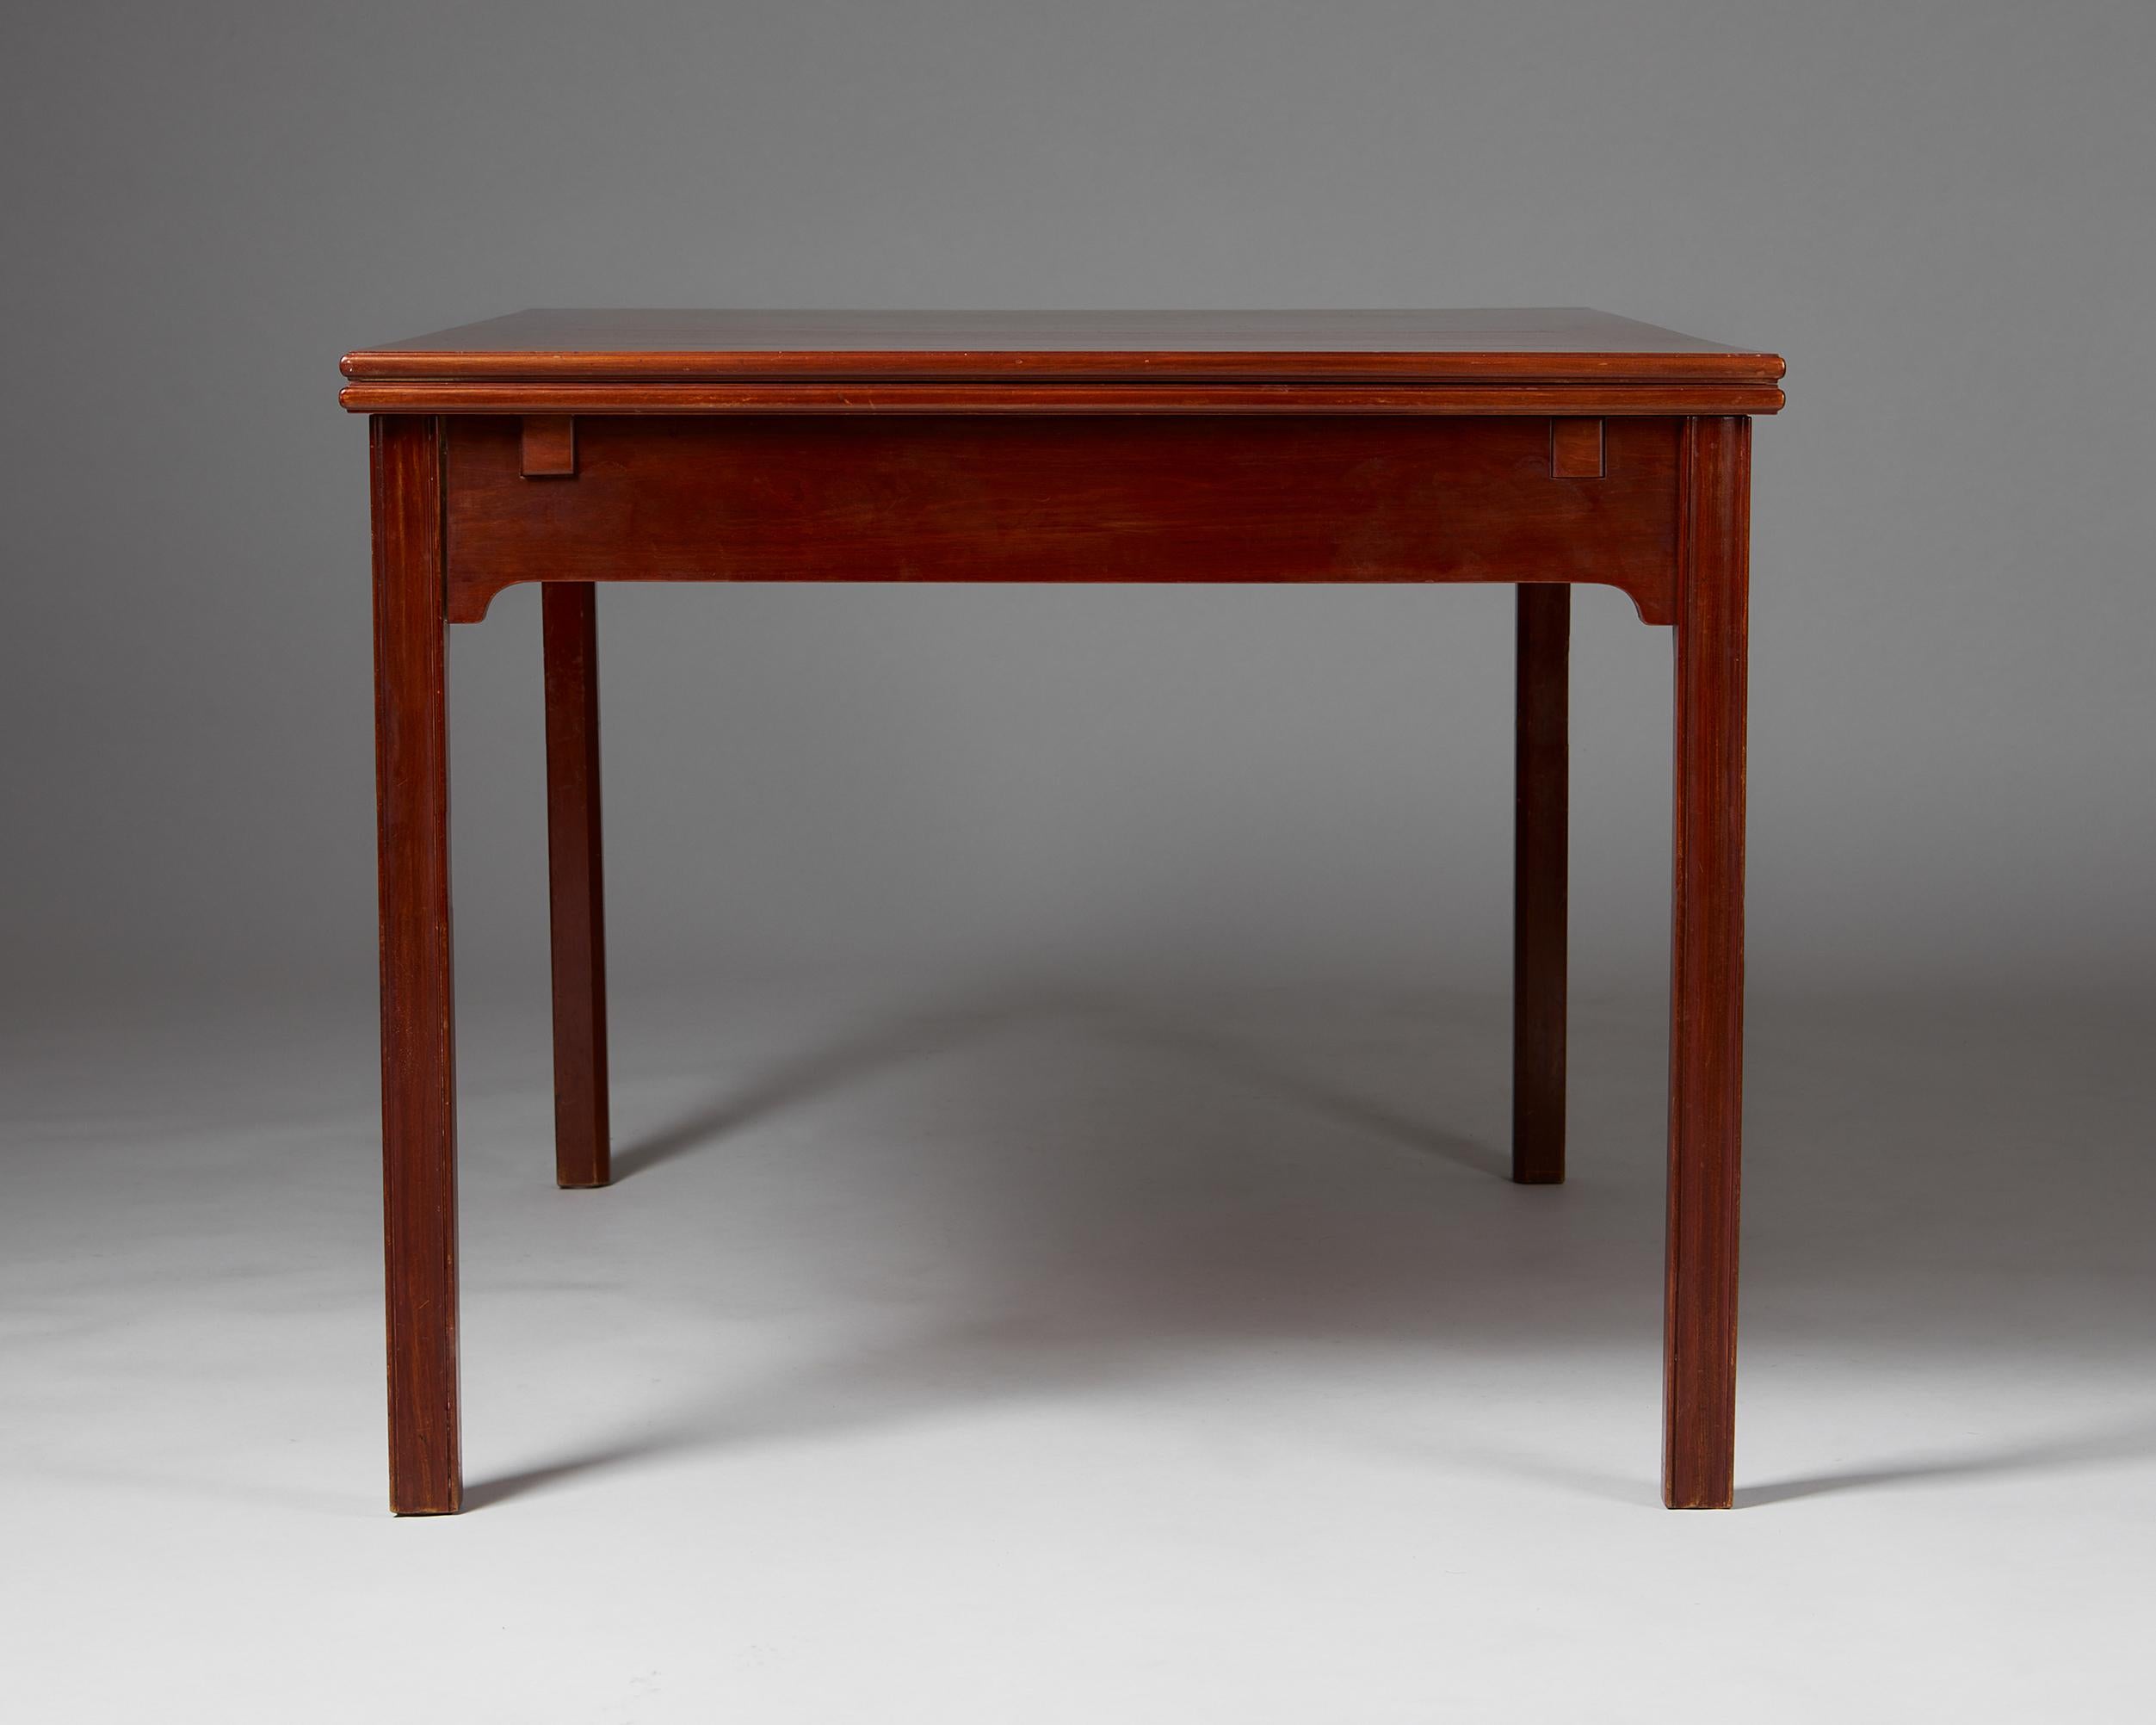 20th Century Dining Table Designed by Kaare Klint for Rud, Rasmussen, Denmark, 1930s